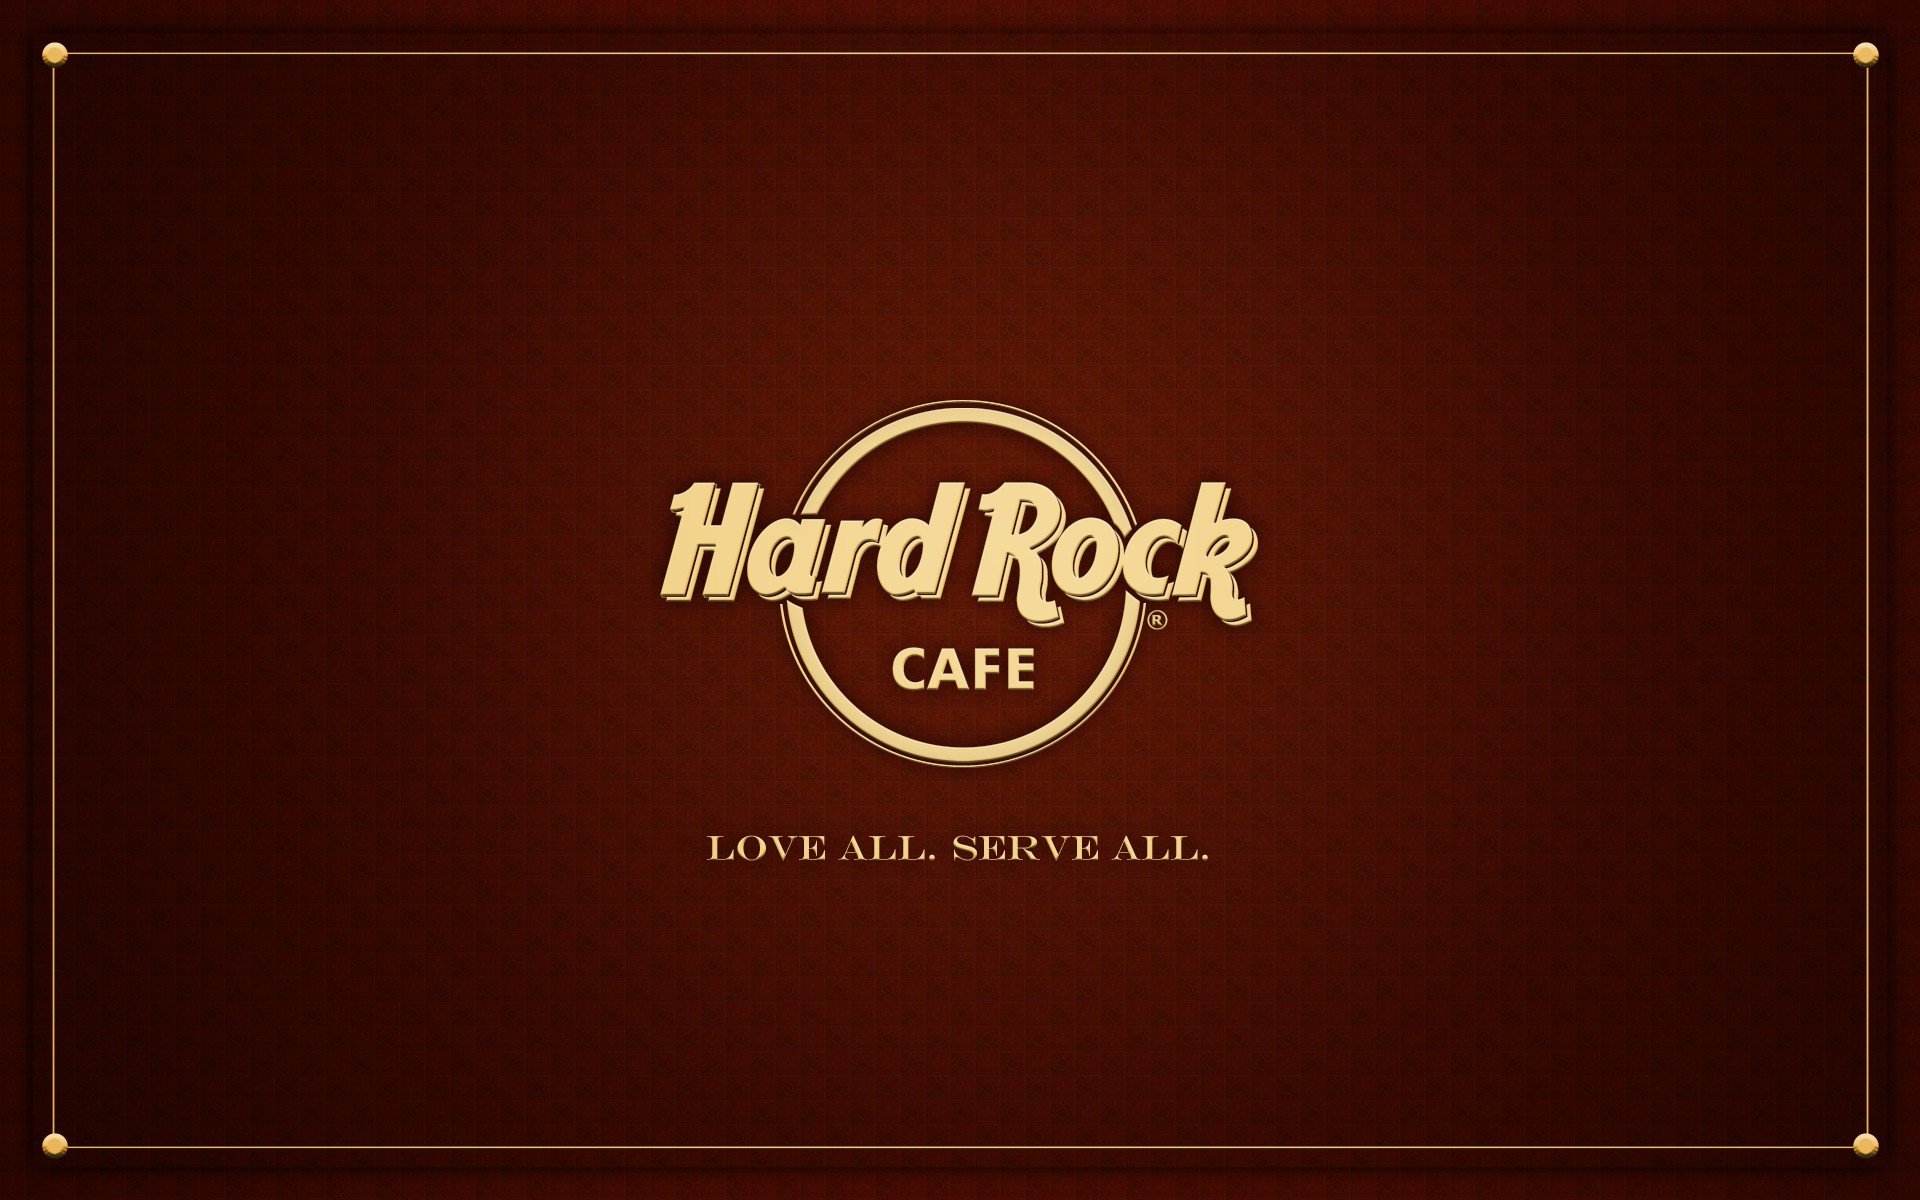  Hard  Rock  Cafe Fond  d cran  HD Arri re Plan 1920x1200 